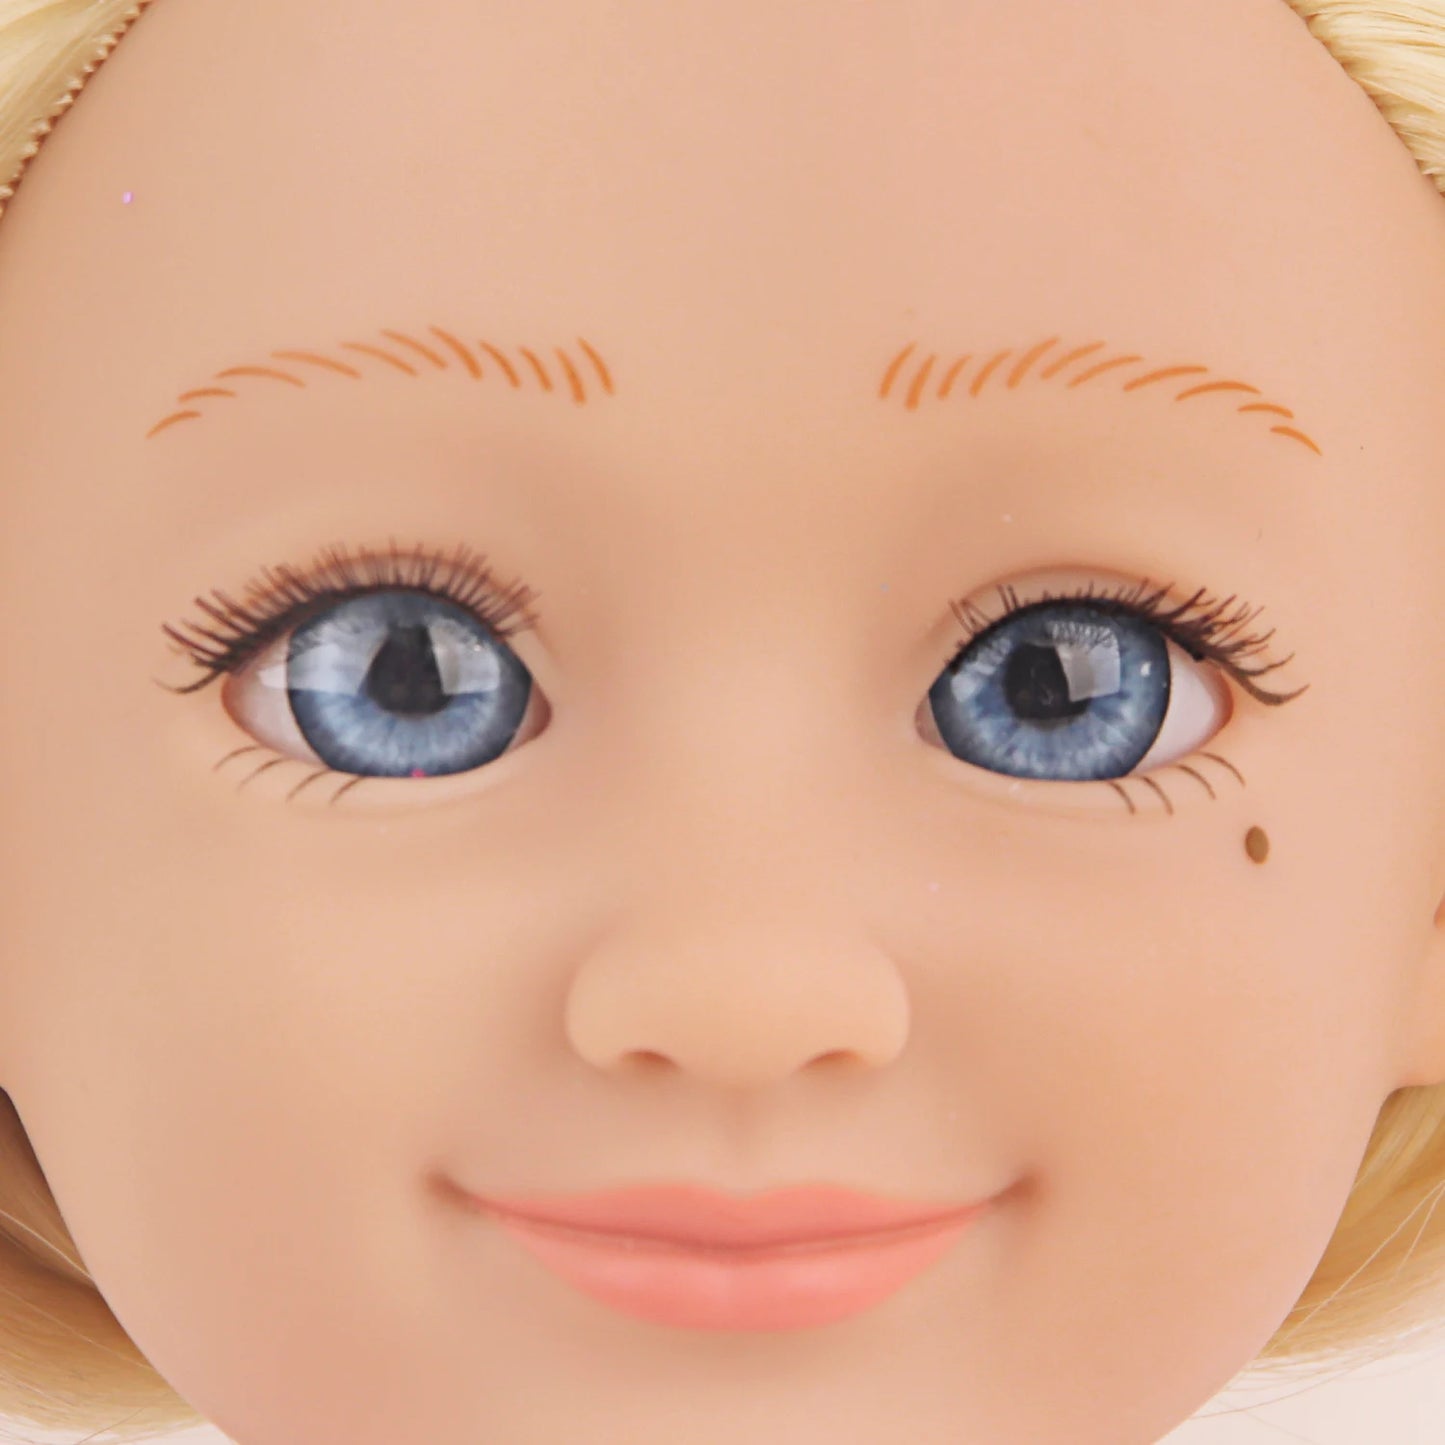 Lucy 14 inch Girl Doll, American Girl WellieWishers like doll - Annie Potter's Yarn Basket